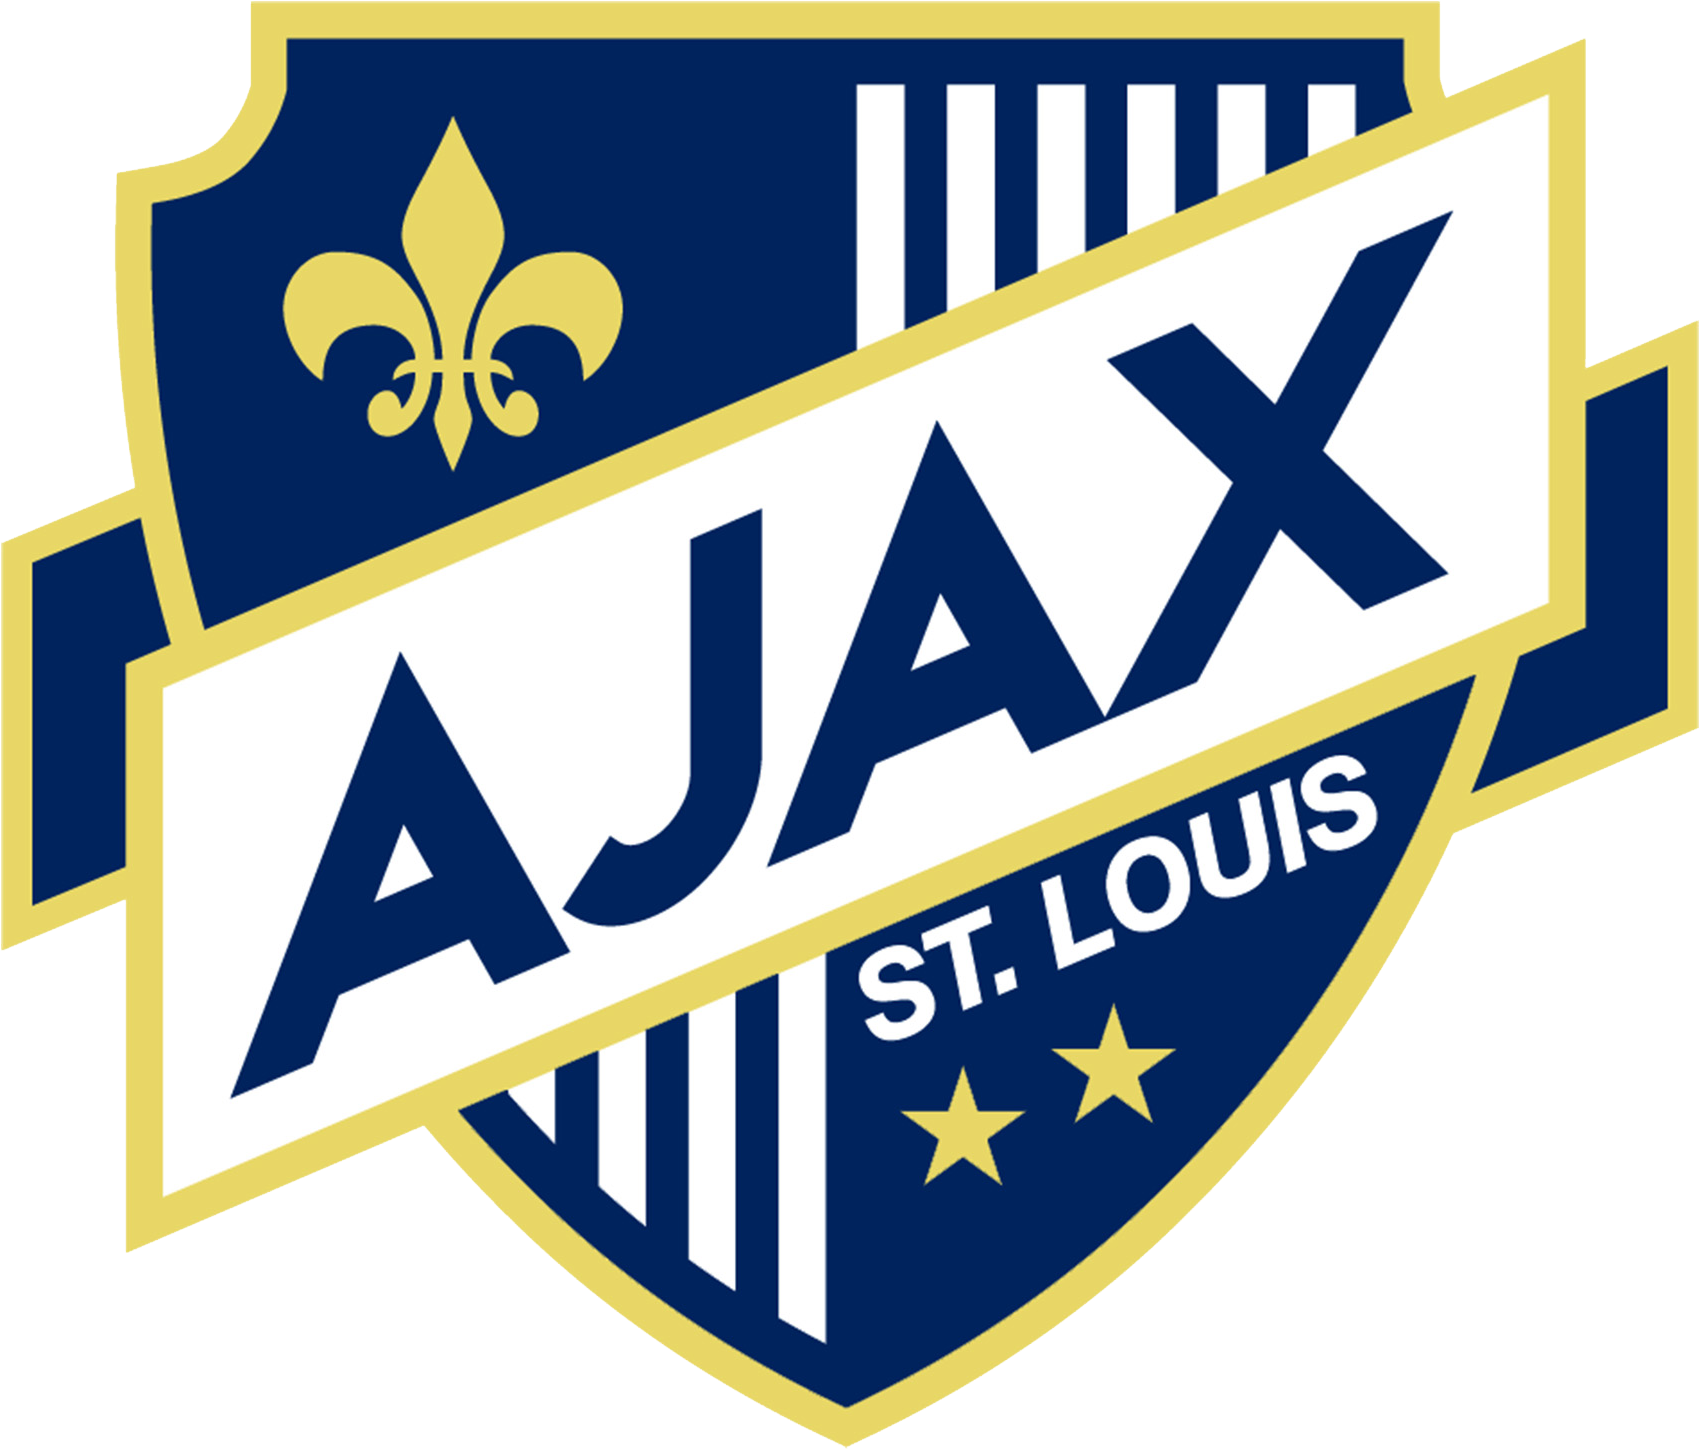 Louis Sc - Ajax Soccer Club (1800x1473), Png Download